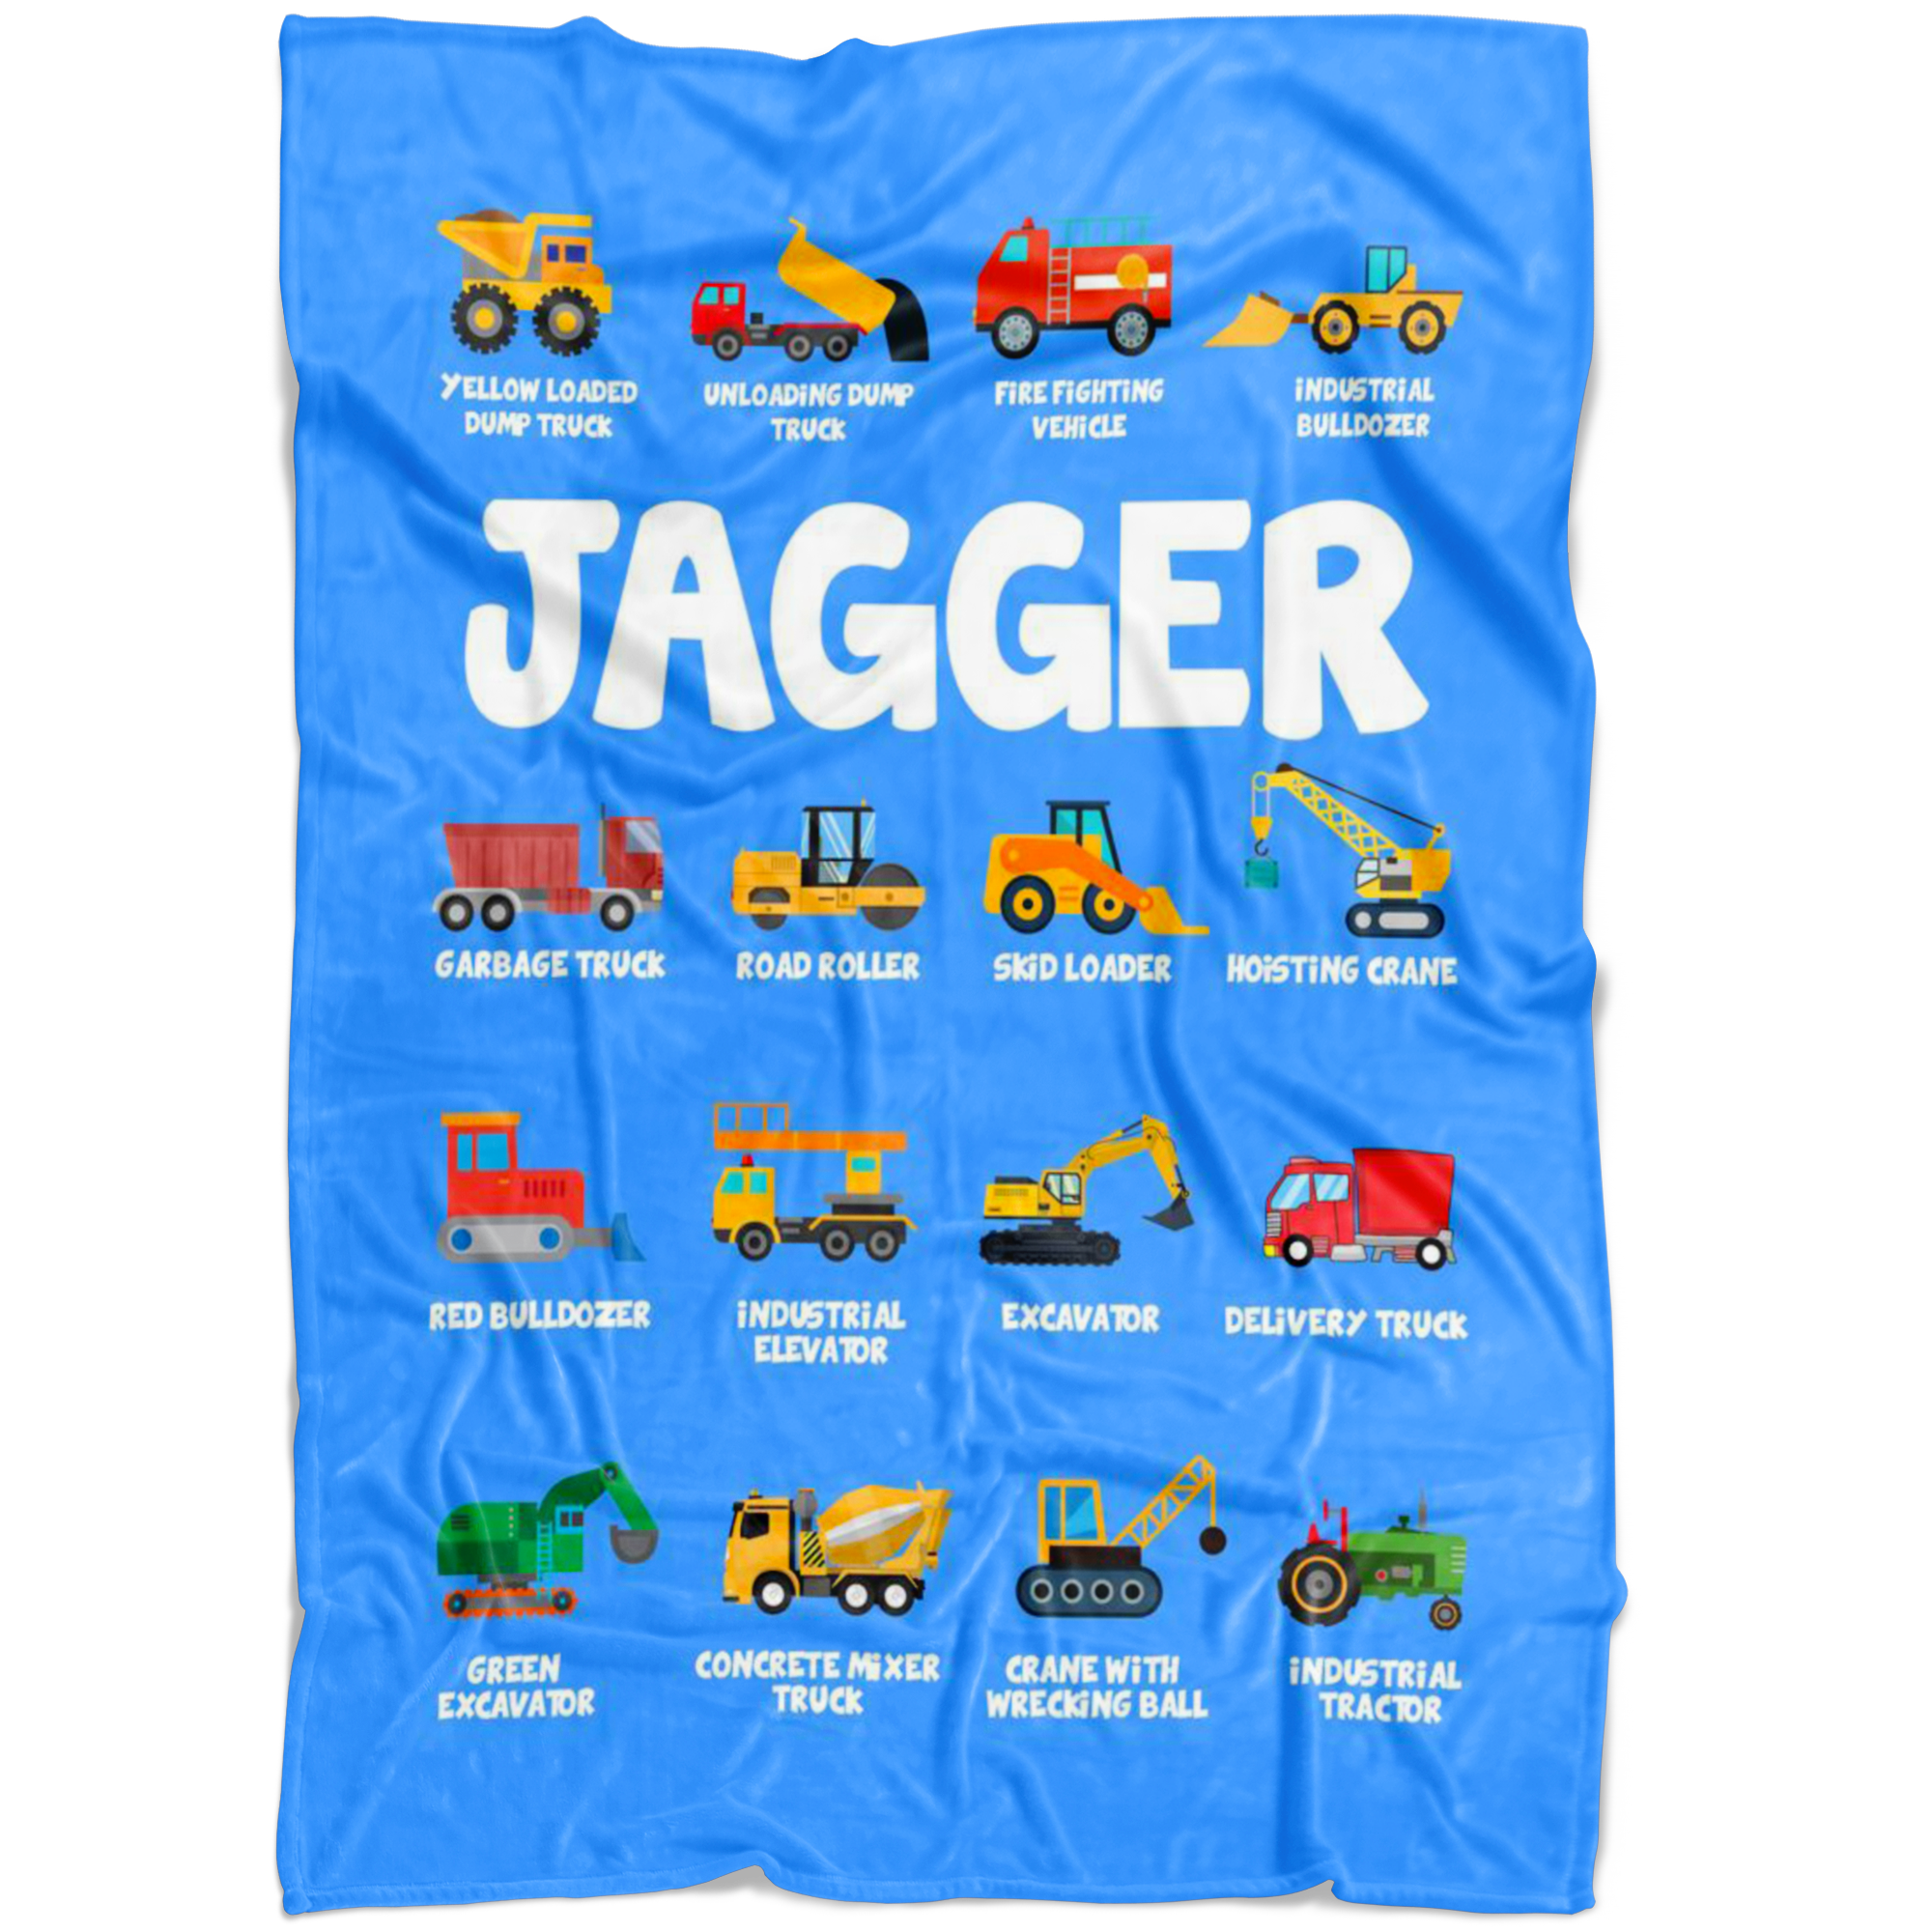 JAGGER Construction Blanket Blue